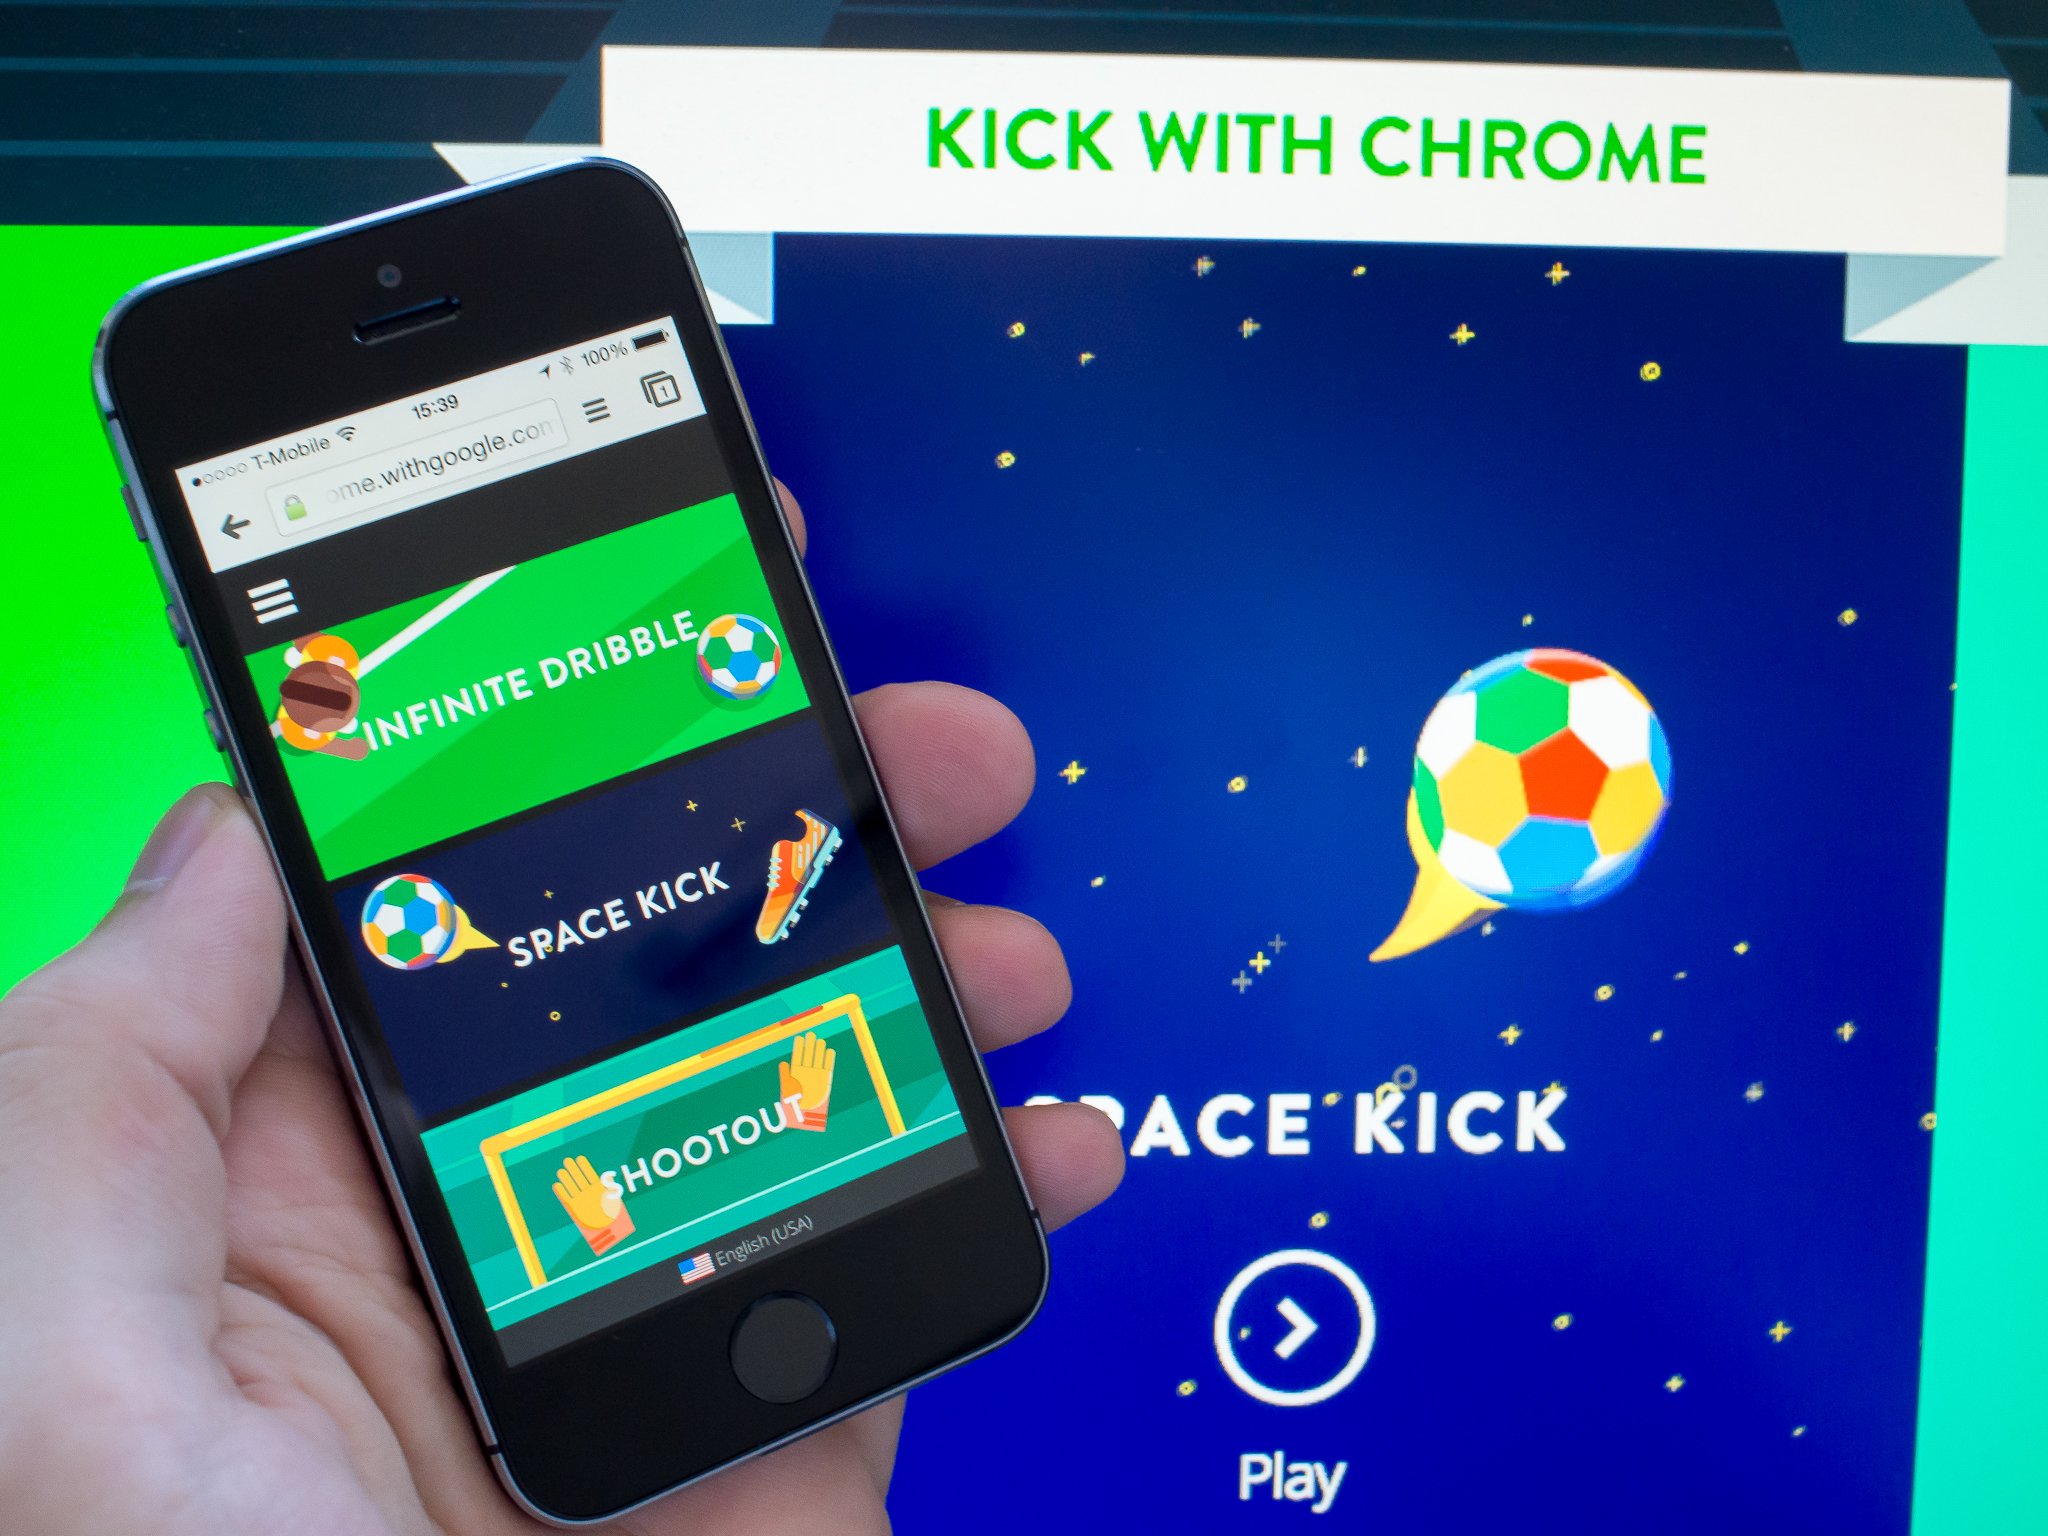 Chrome-Kick-Game-iPhone.jpg